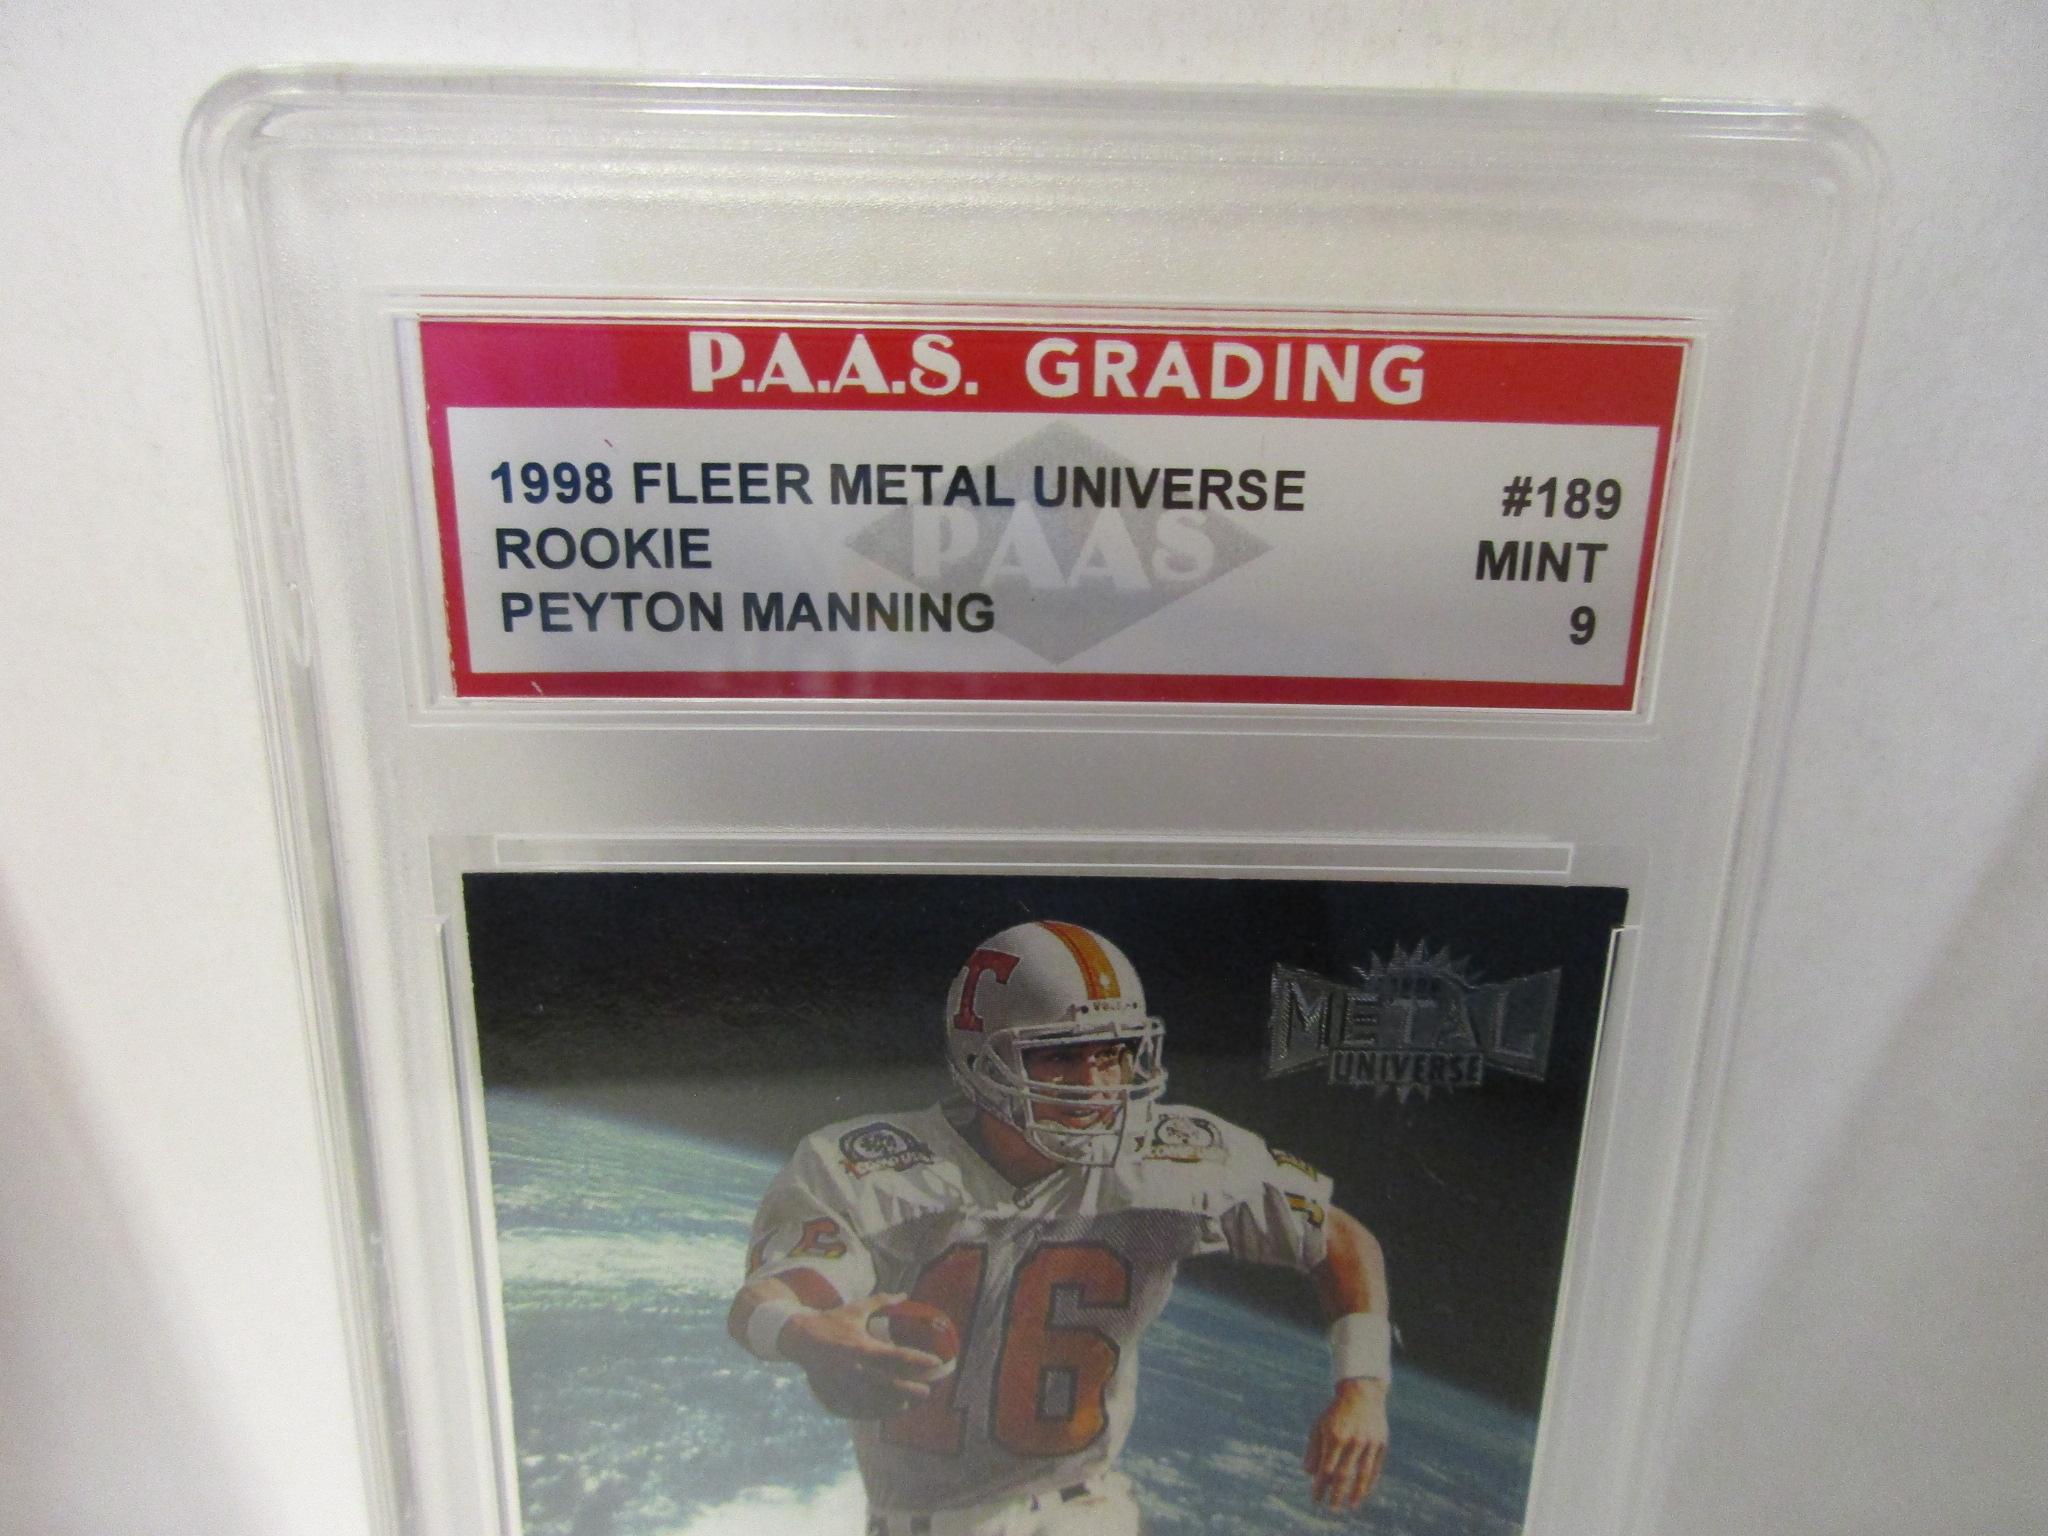 Peyton Manning Tennessee 1998 Fleer Metal Universe ROOKIE #189 graded PAAS Mint 9